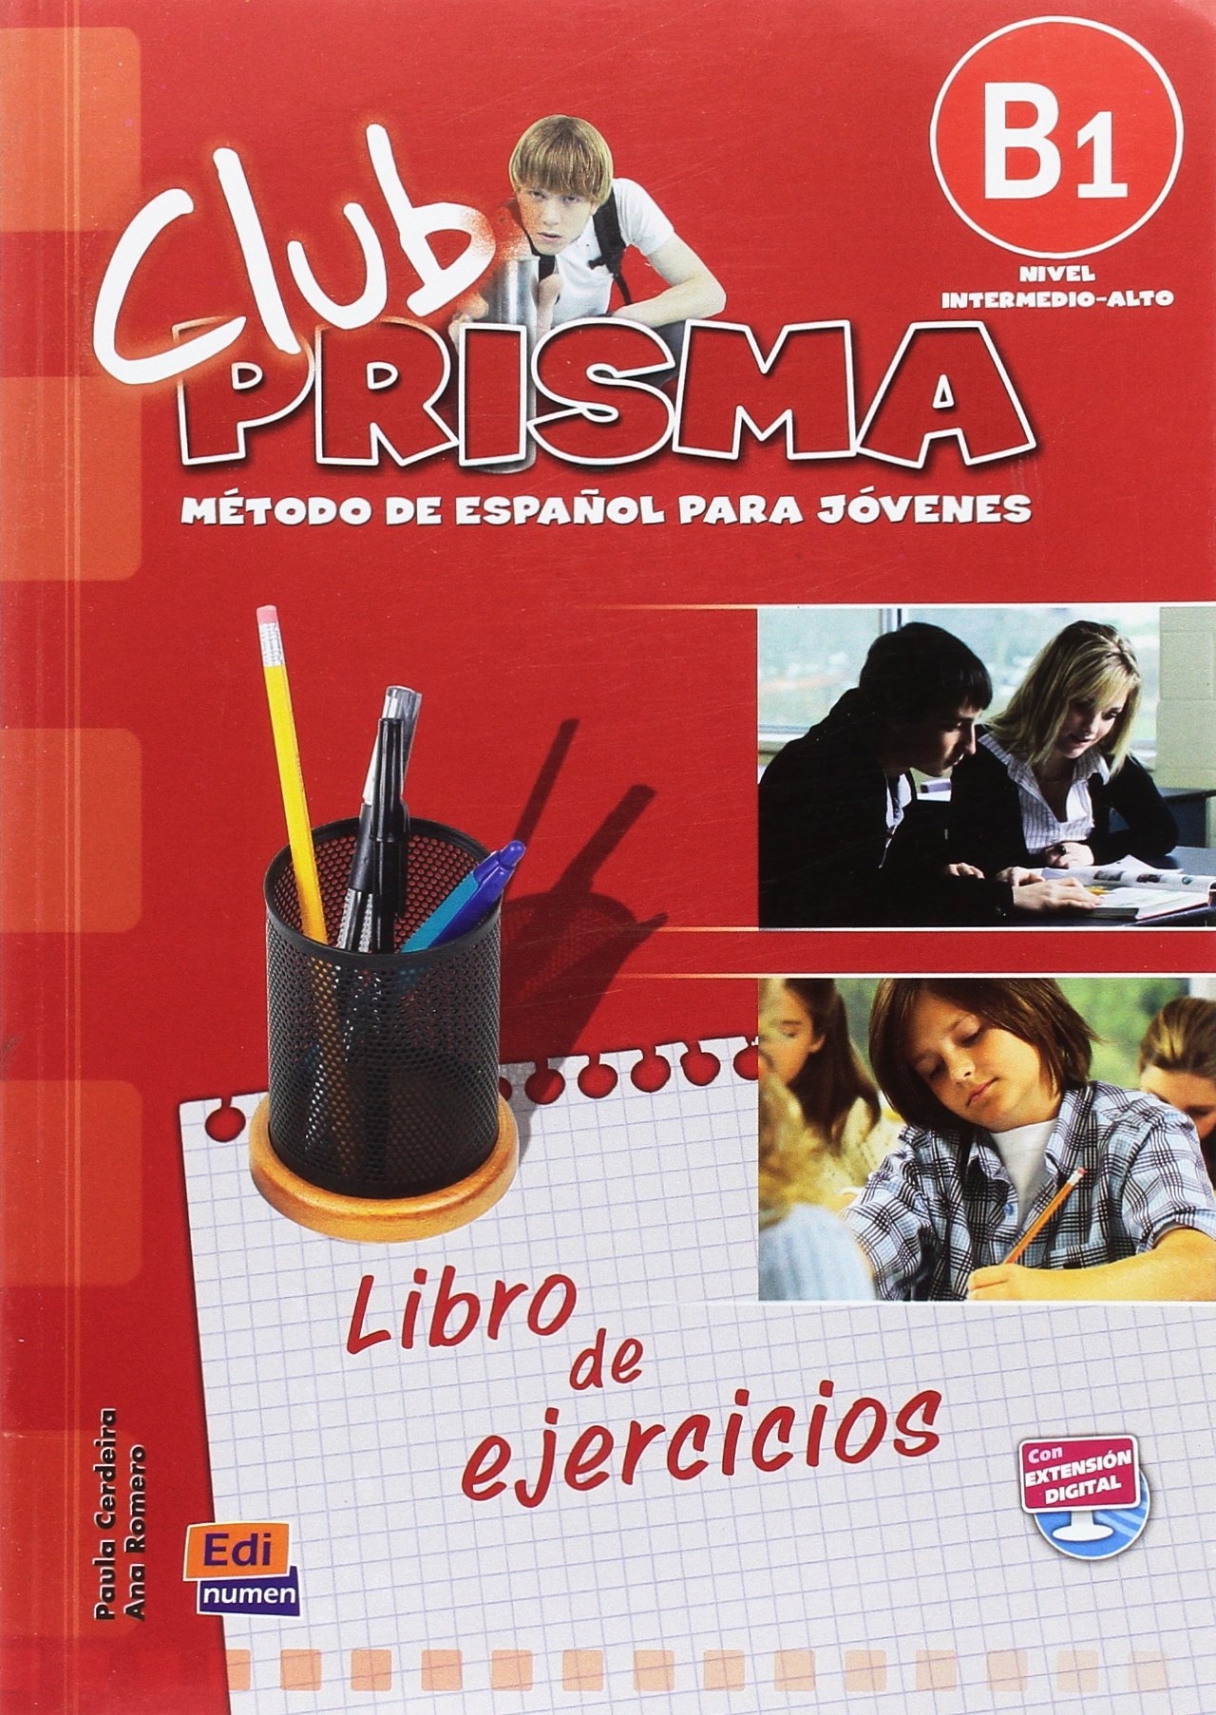  : Maria Jose Gelabert Club Prisma Nivel B1 - Libro de ejercicios 